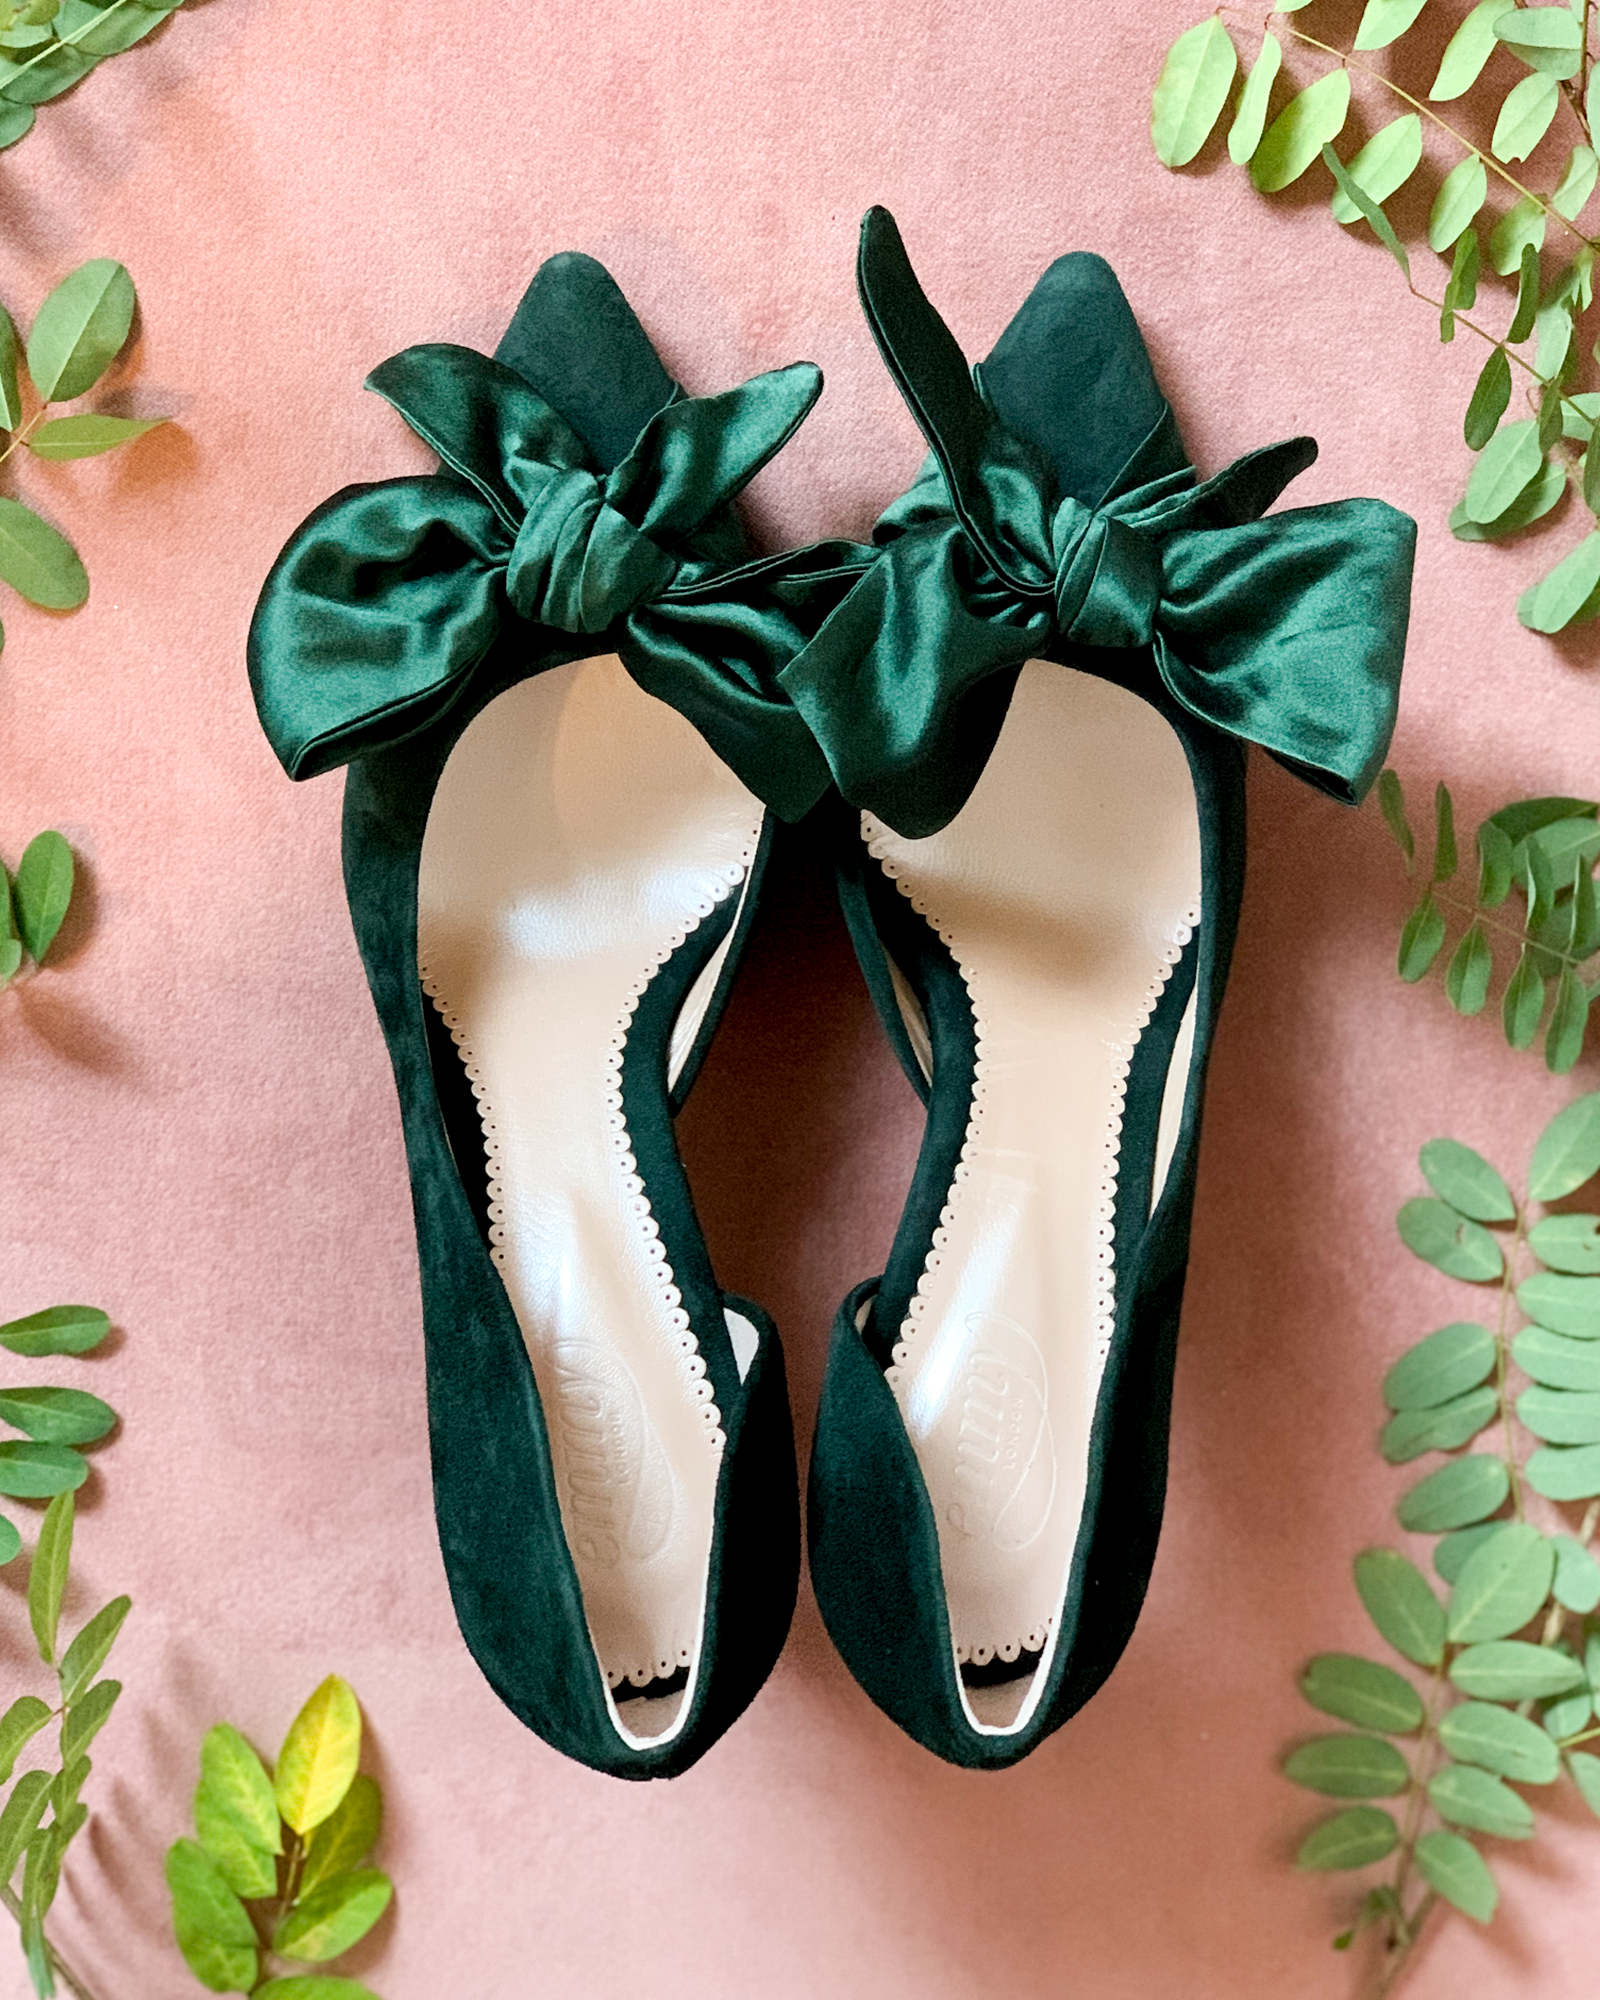 Florence High Heel Fashion Shoe Green Evening Shoes  image